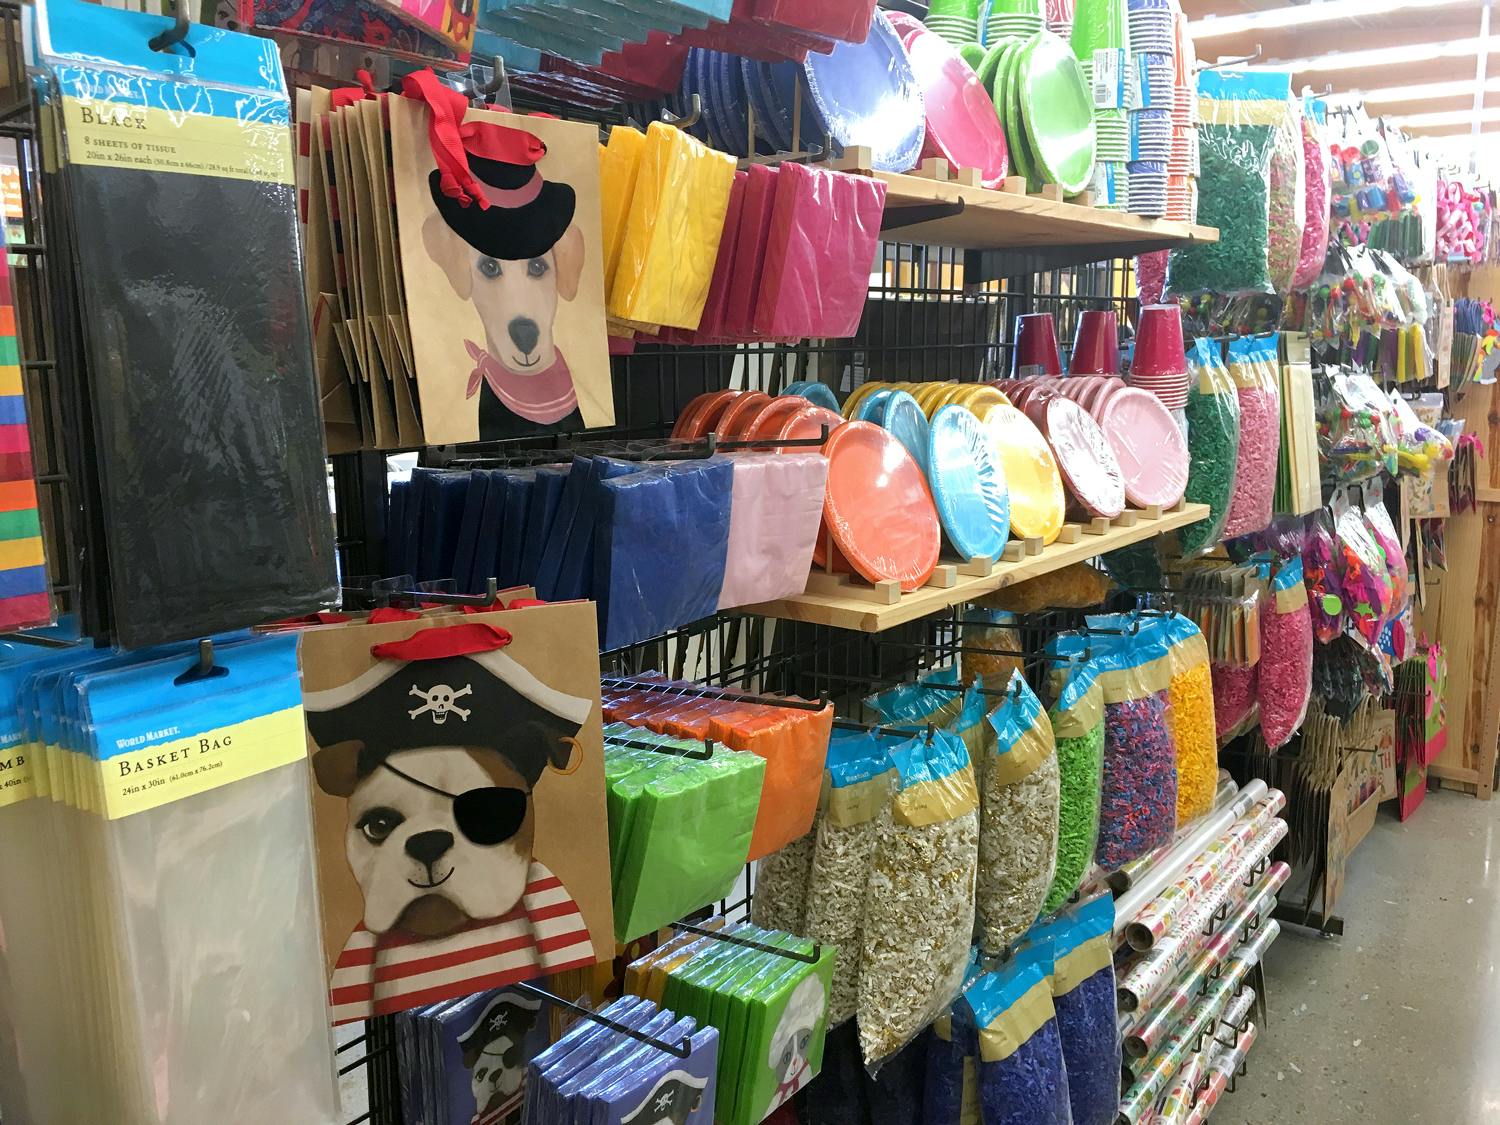 world market party supplies on store shelf